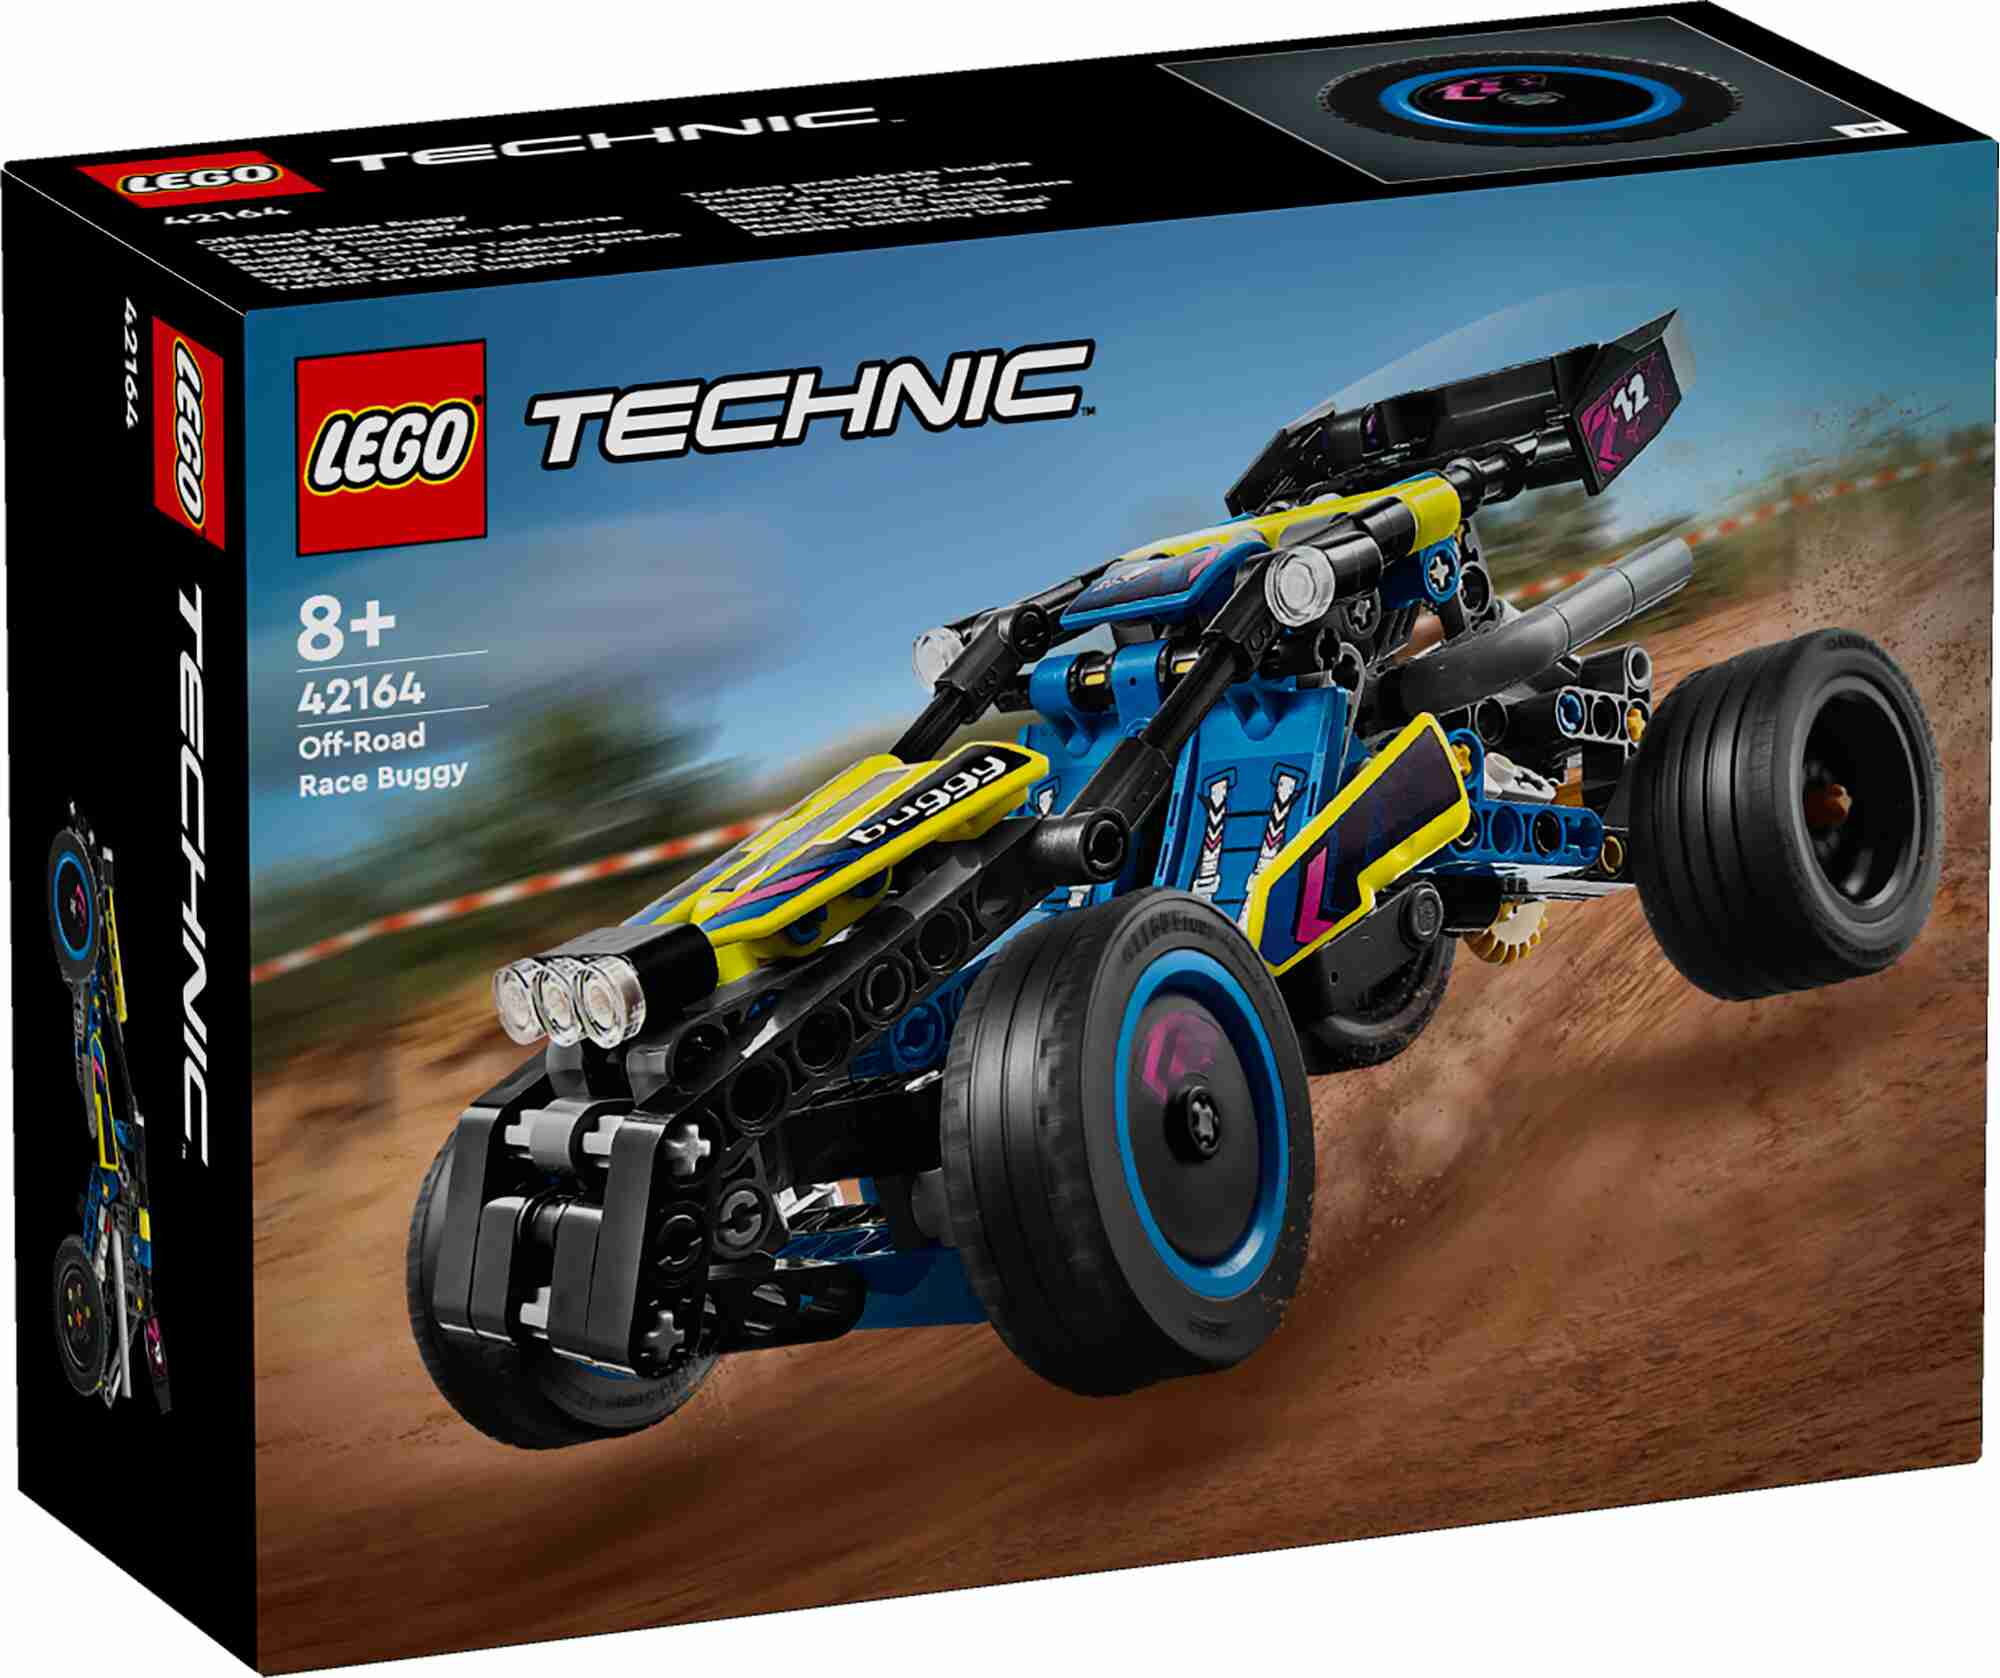 LEGO 42164 Technic Offroad Rennbuggy, 4-Zylindermotor, Lenkung, Federung